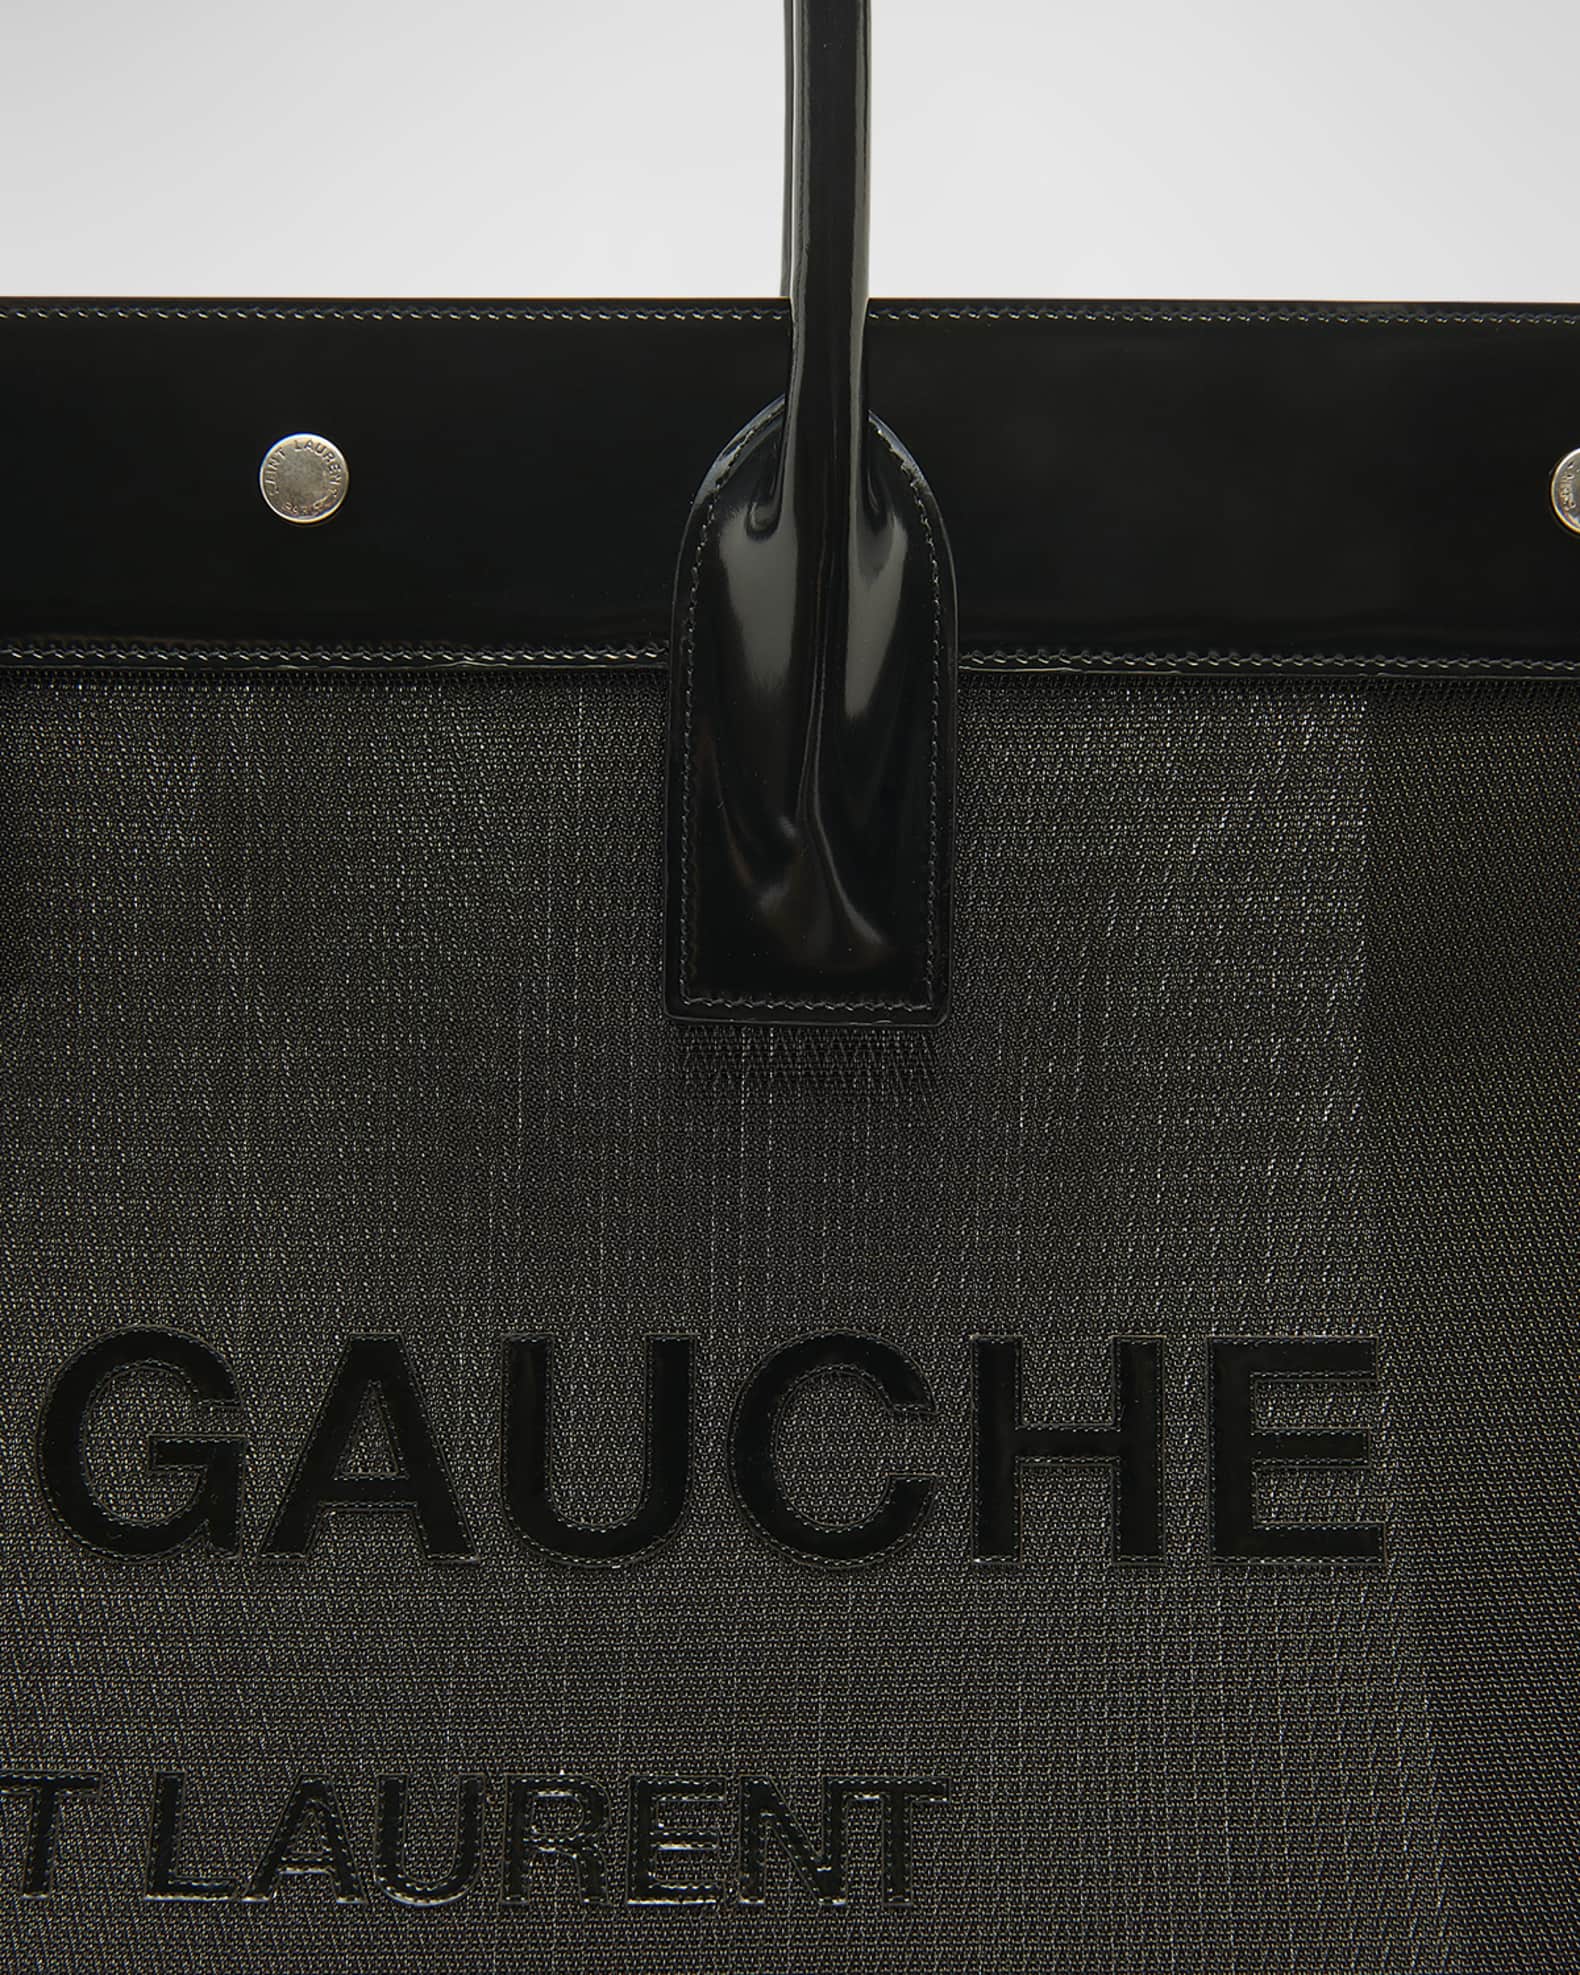 New Designer Handbag Unboxing - Saint Laurent Sac De Jour Croc Effect